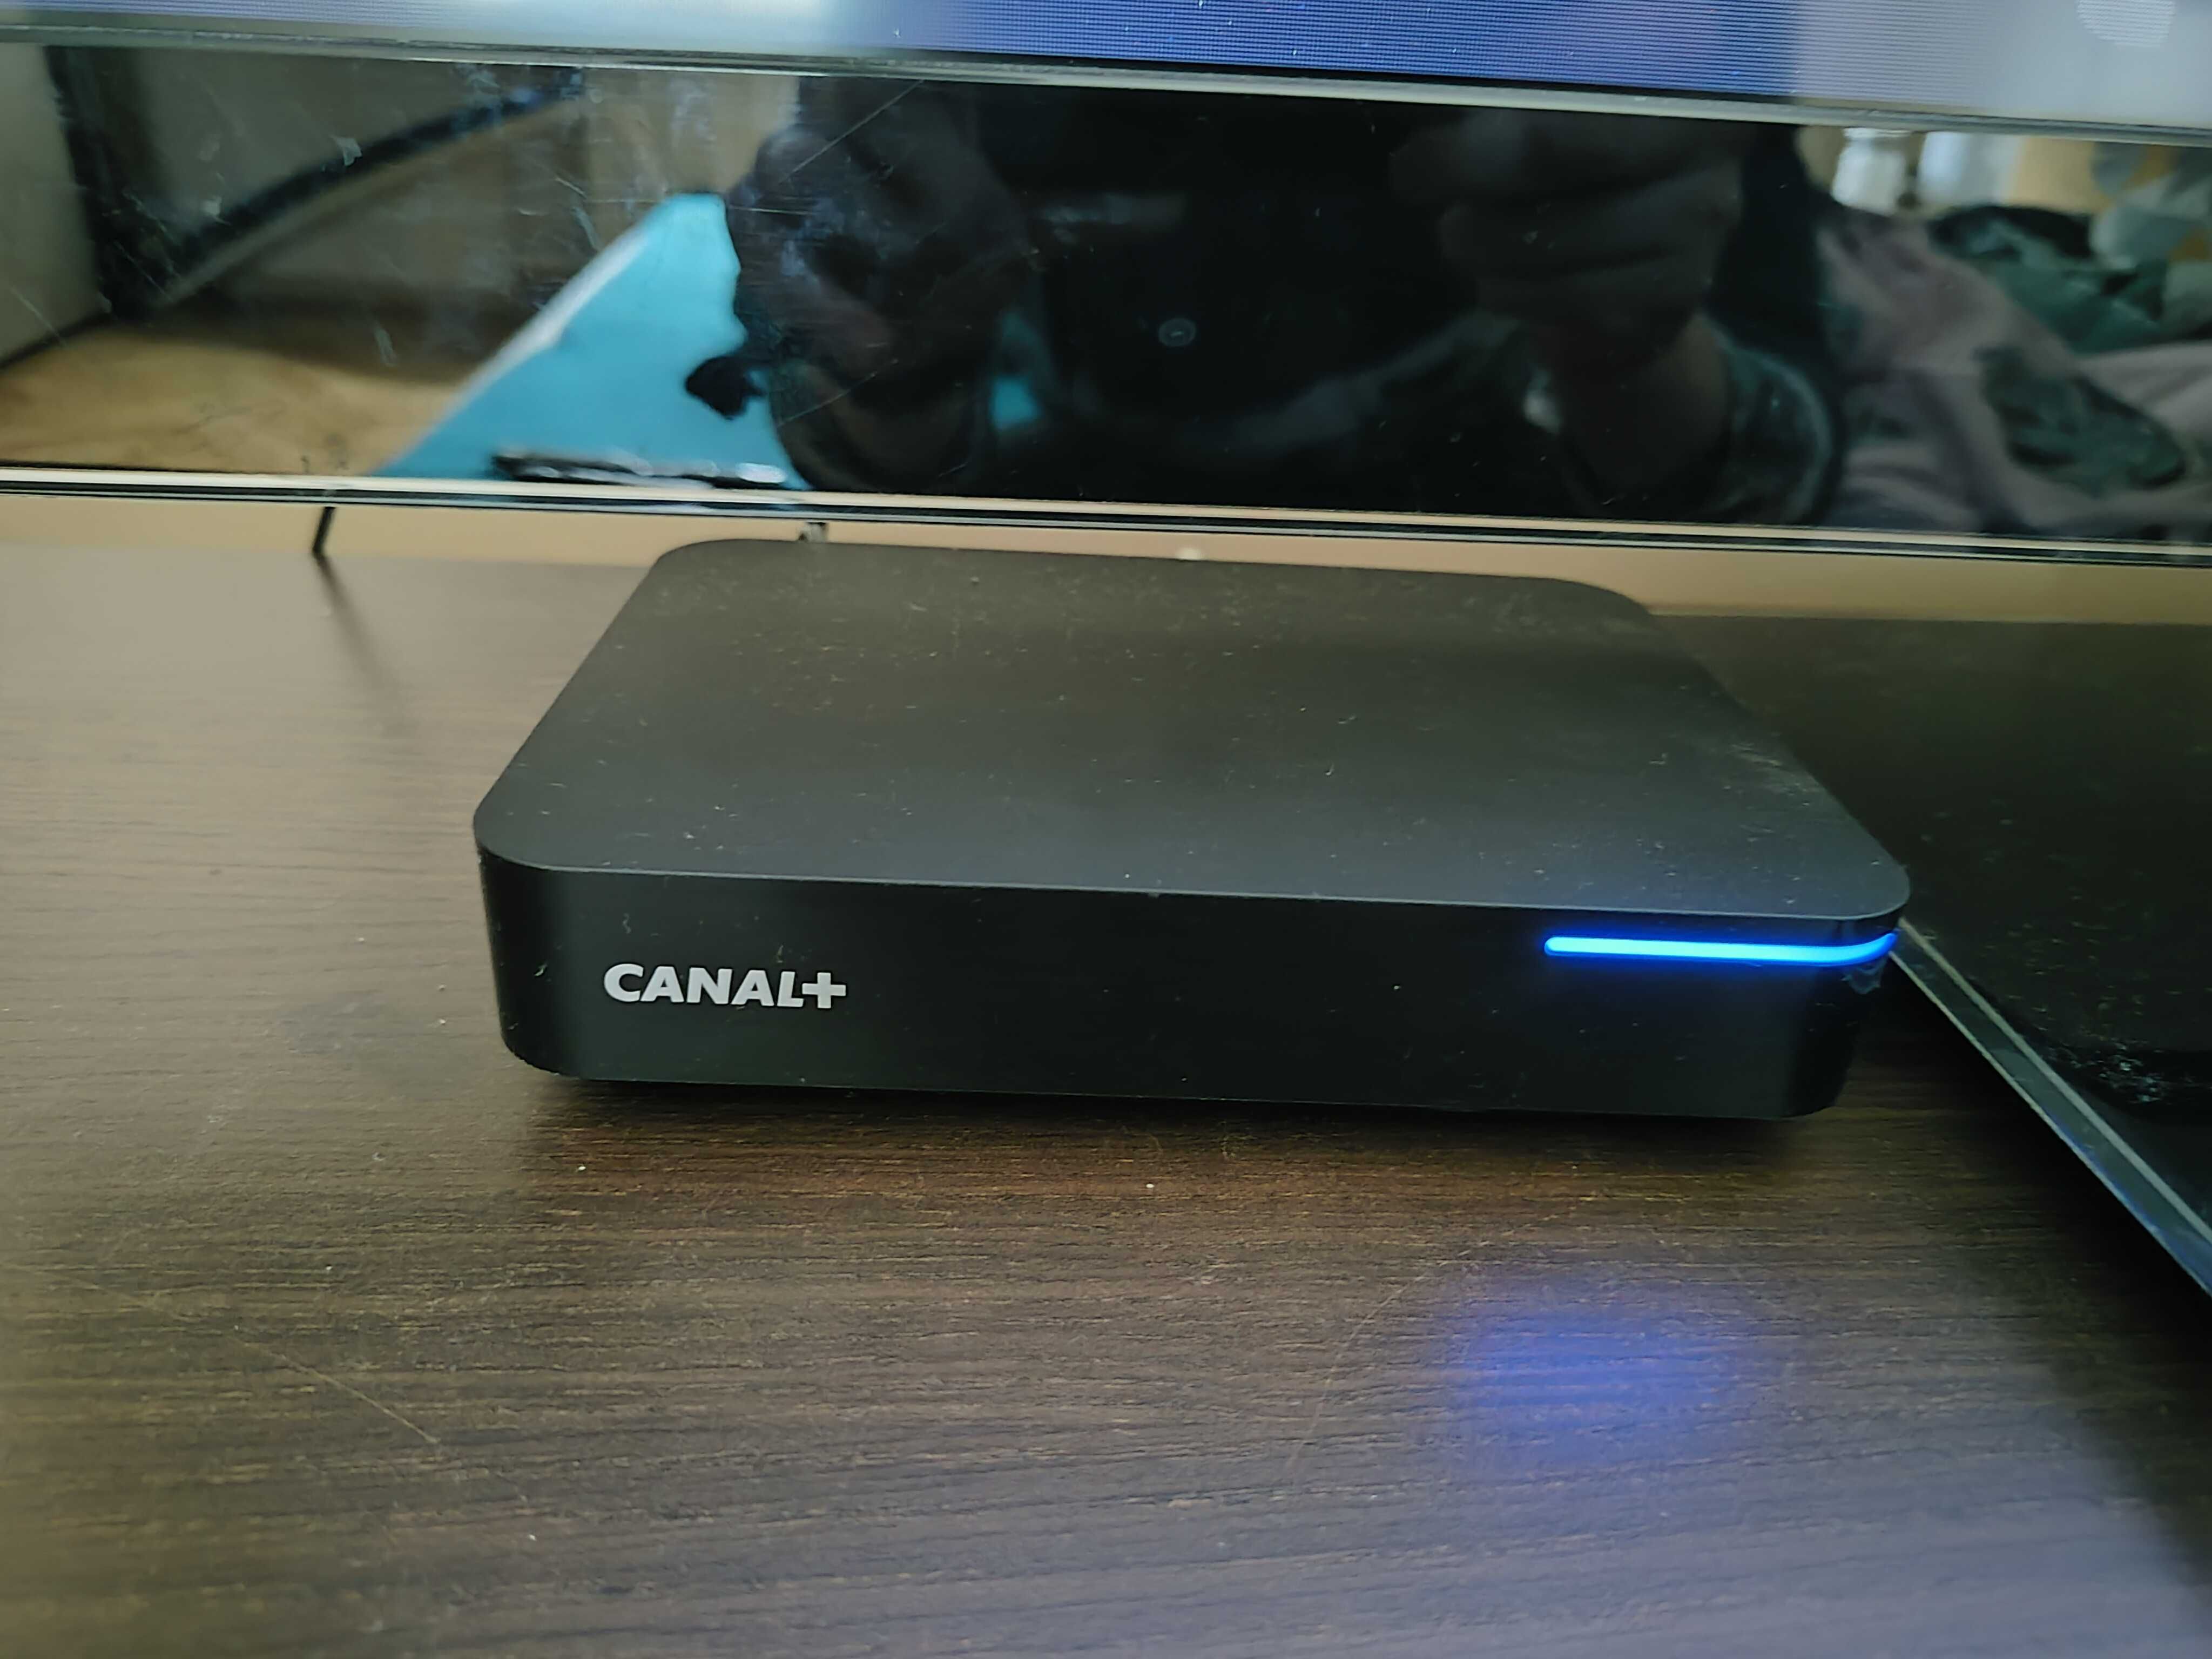 TV LG 47" LED DVBT2 Canal + Netflix WiFi Smart Bluetooth